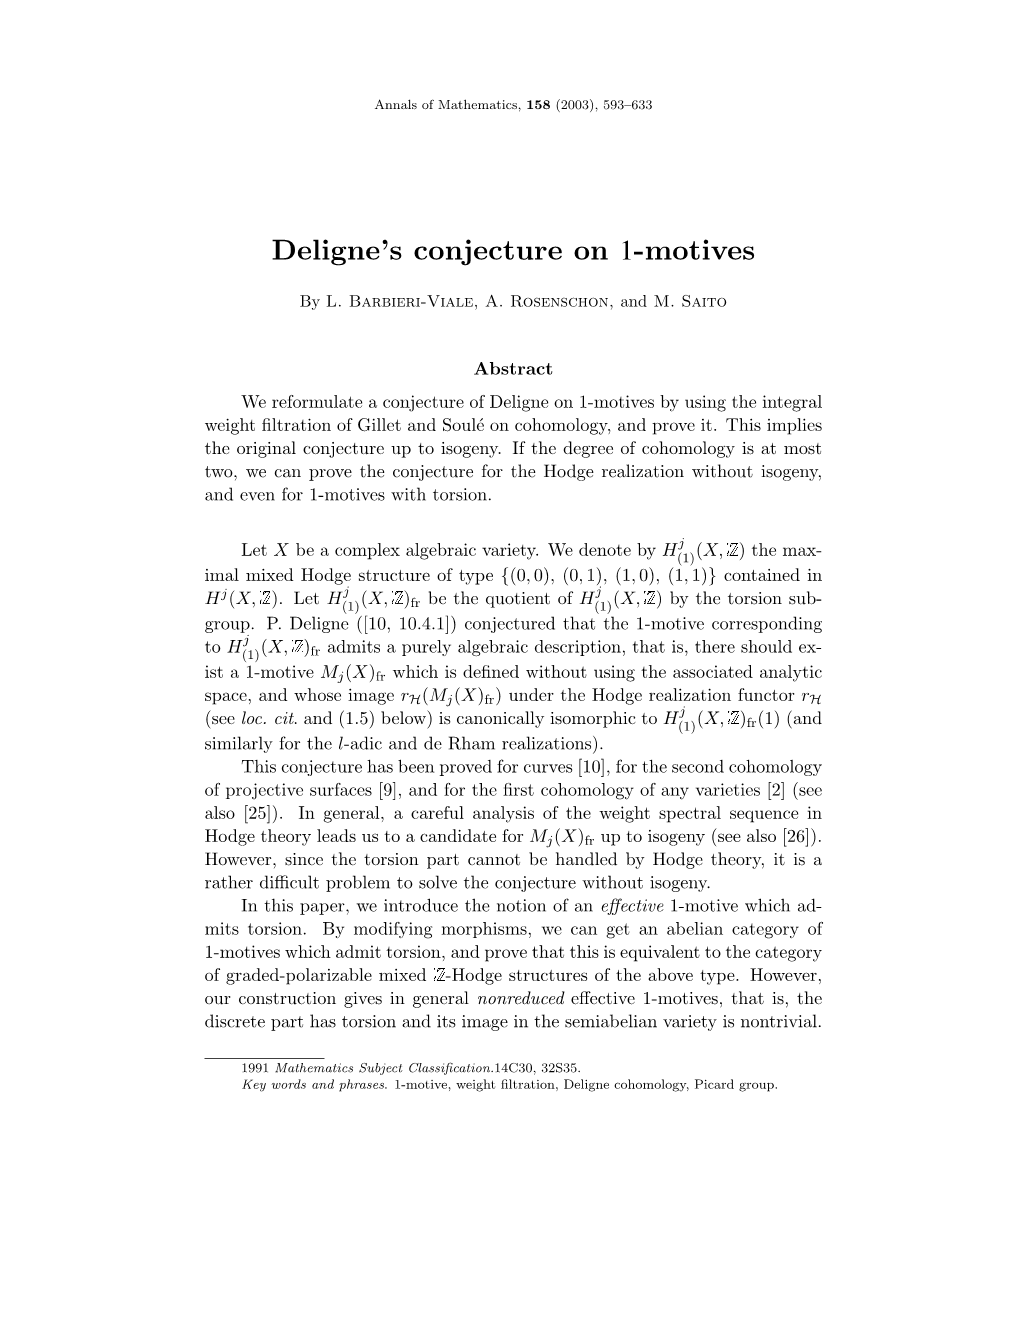 Deligne's Conjecture on 1-Motives